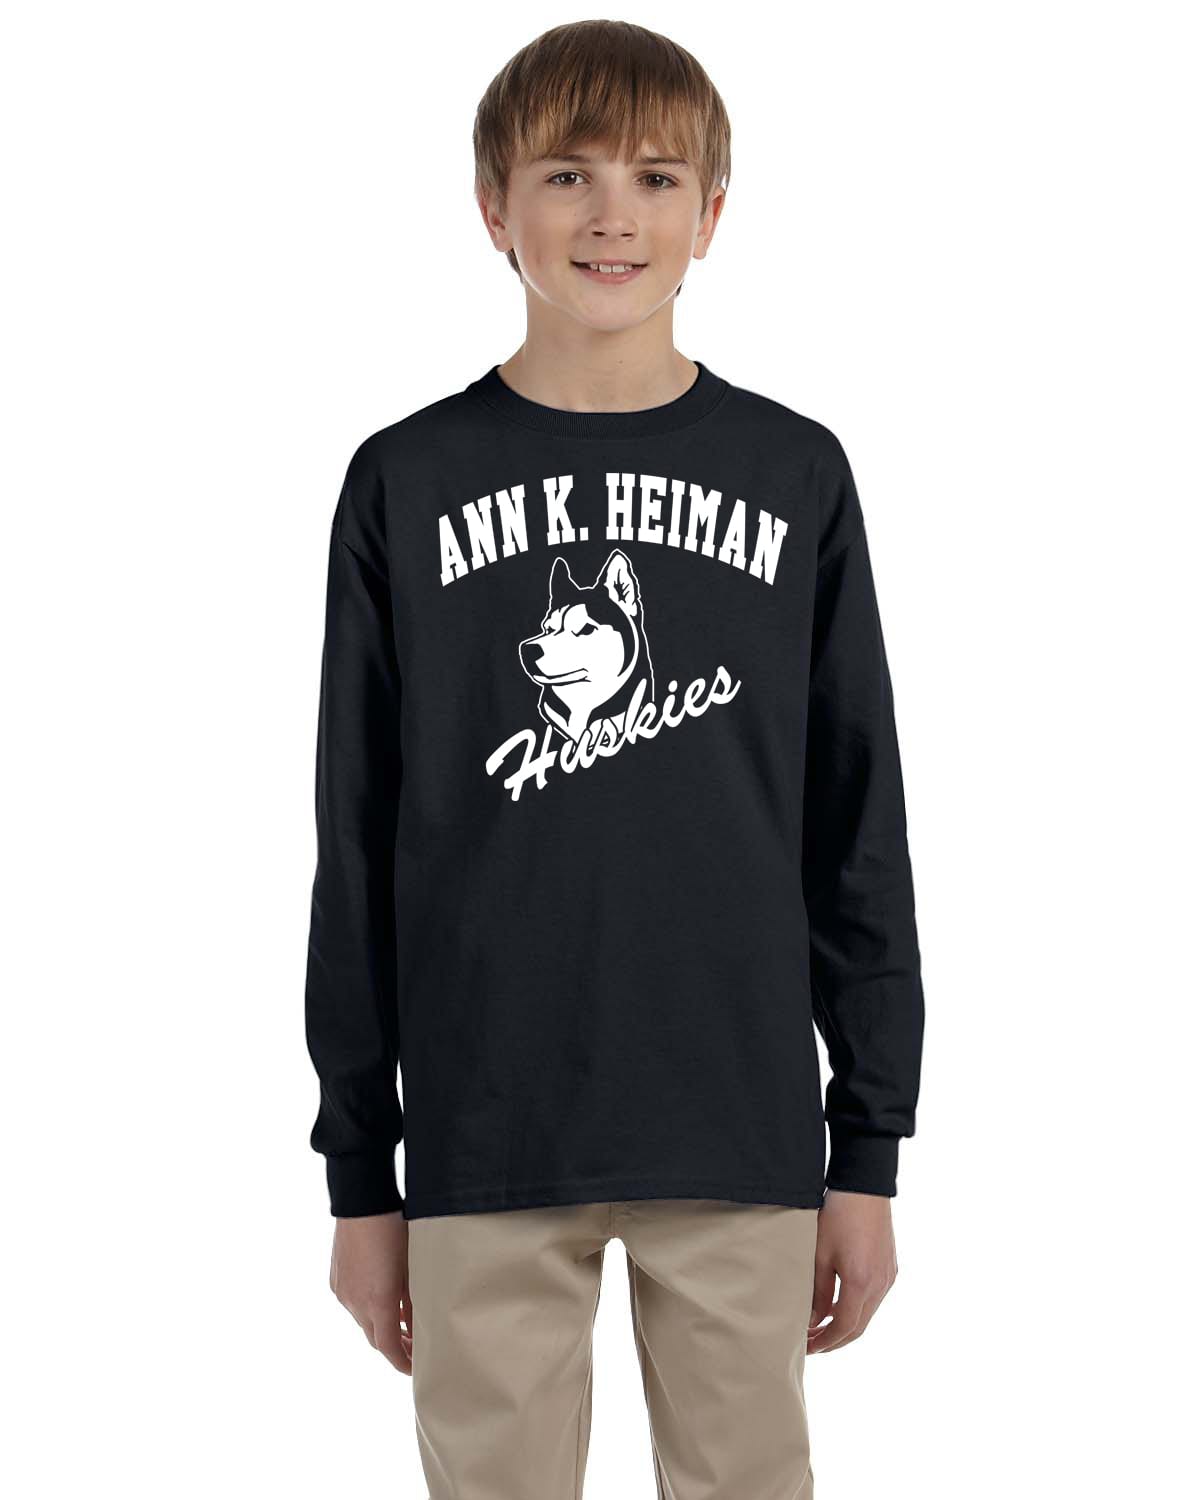 Heiman Elementary School Youth Black Long Sleeve Cotton T-Shirt